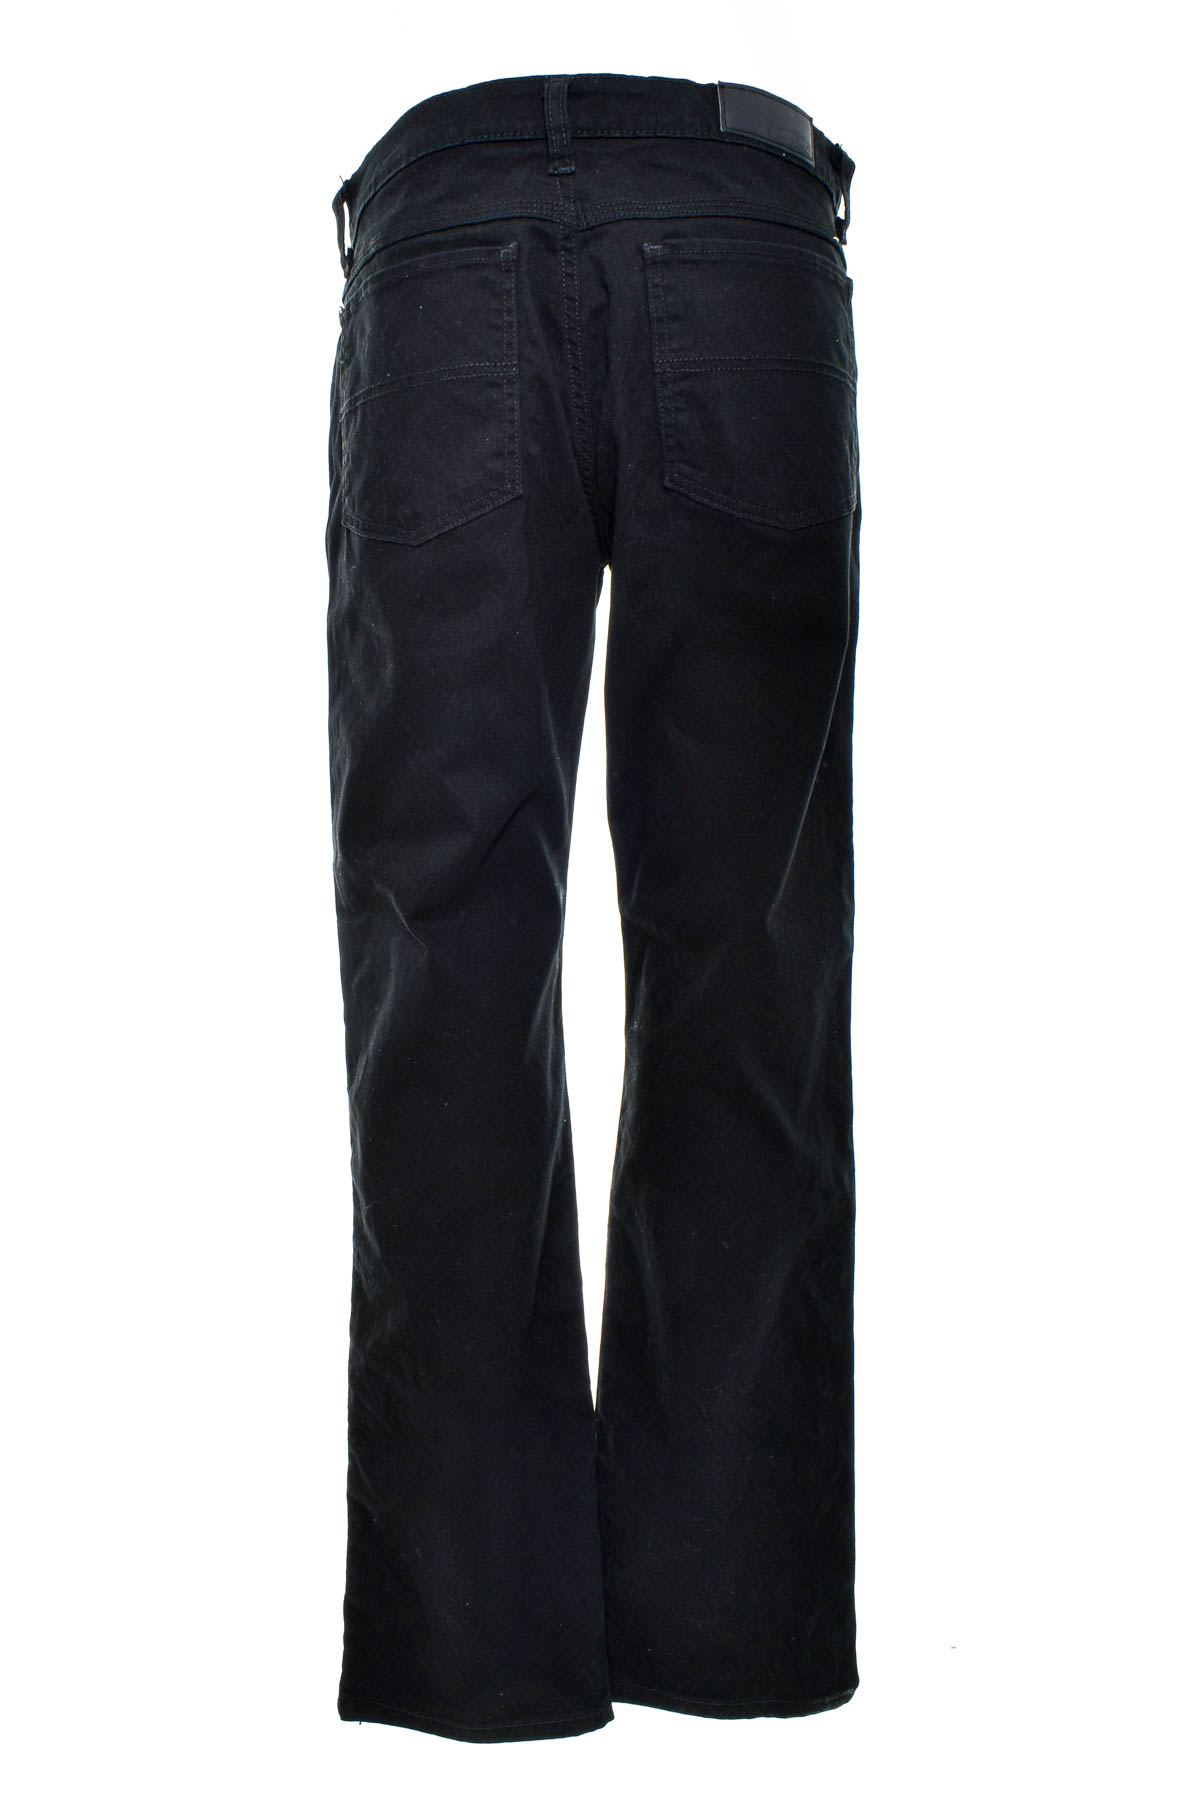 Men's trousers - RIDERS - 1